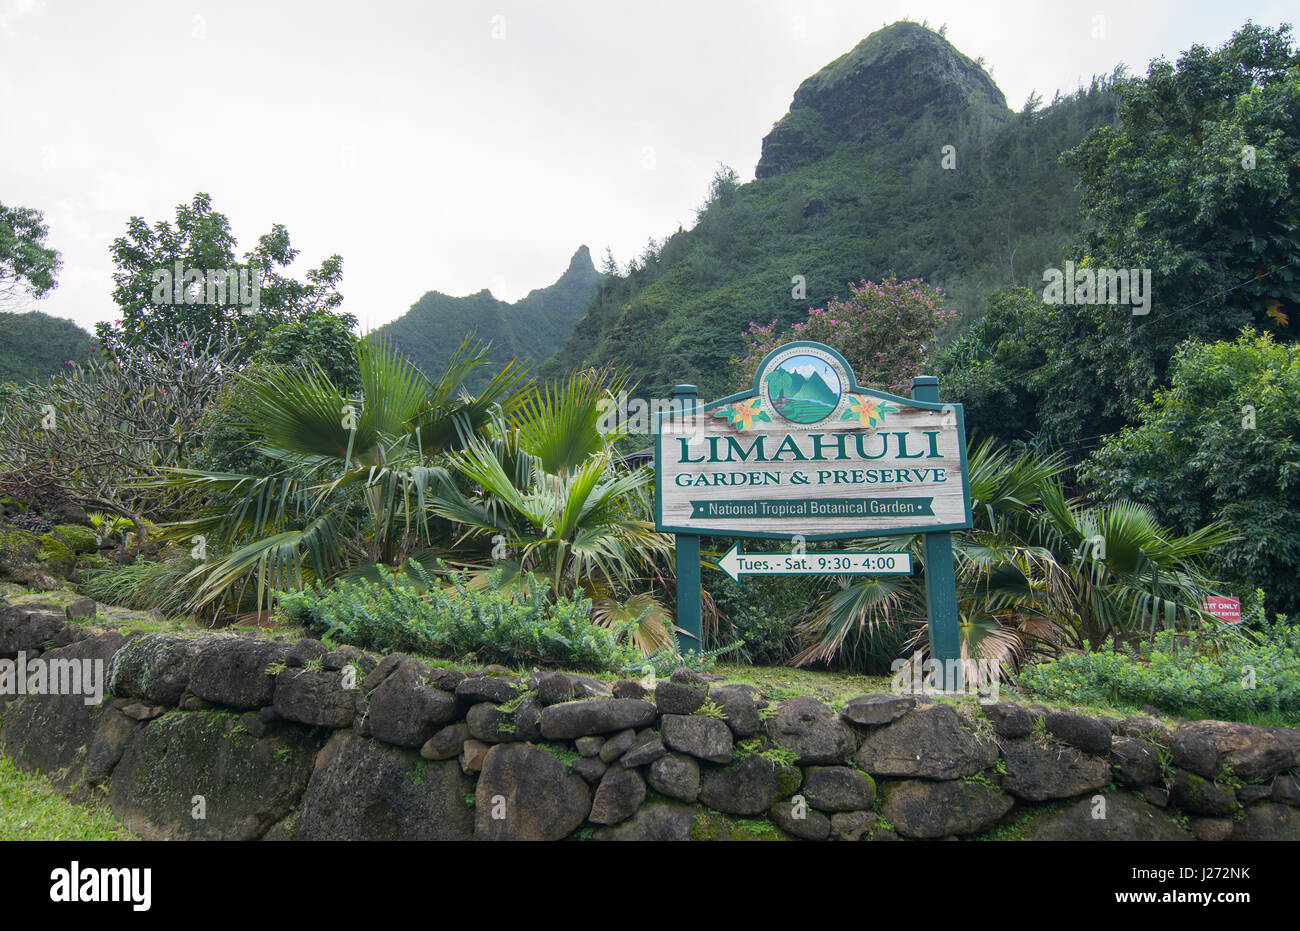 Haena Kauai Hawaii Haena State Park at Limahull Garden & Preserve Tropical Botanical Garden North Shore Stock Photo